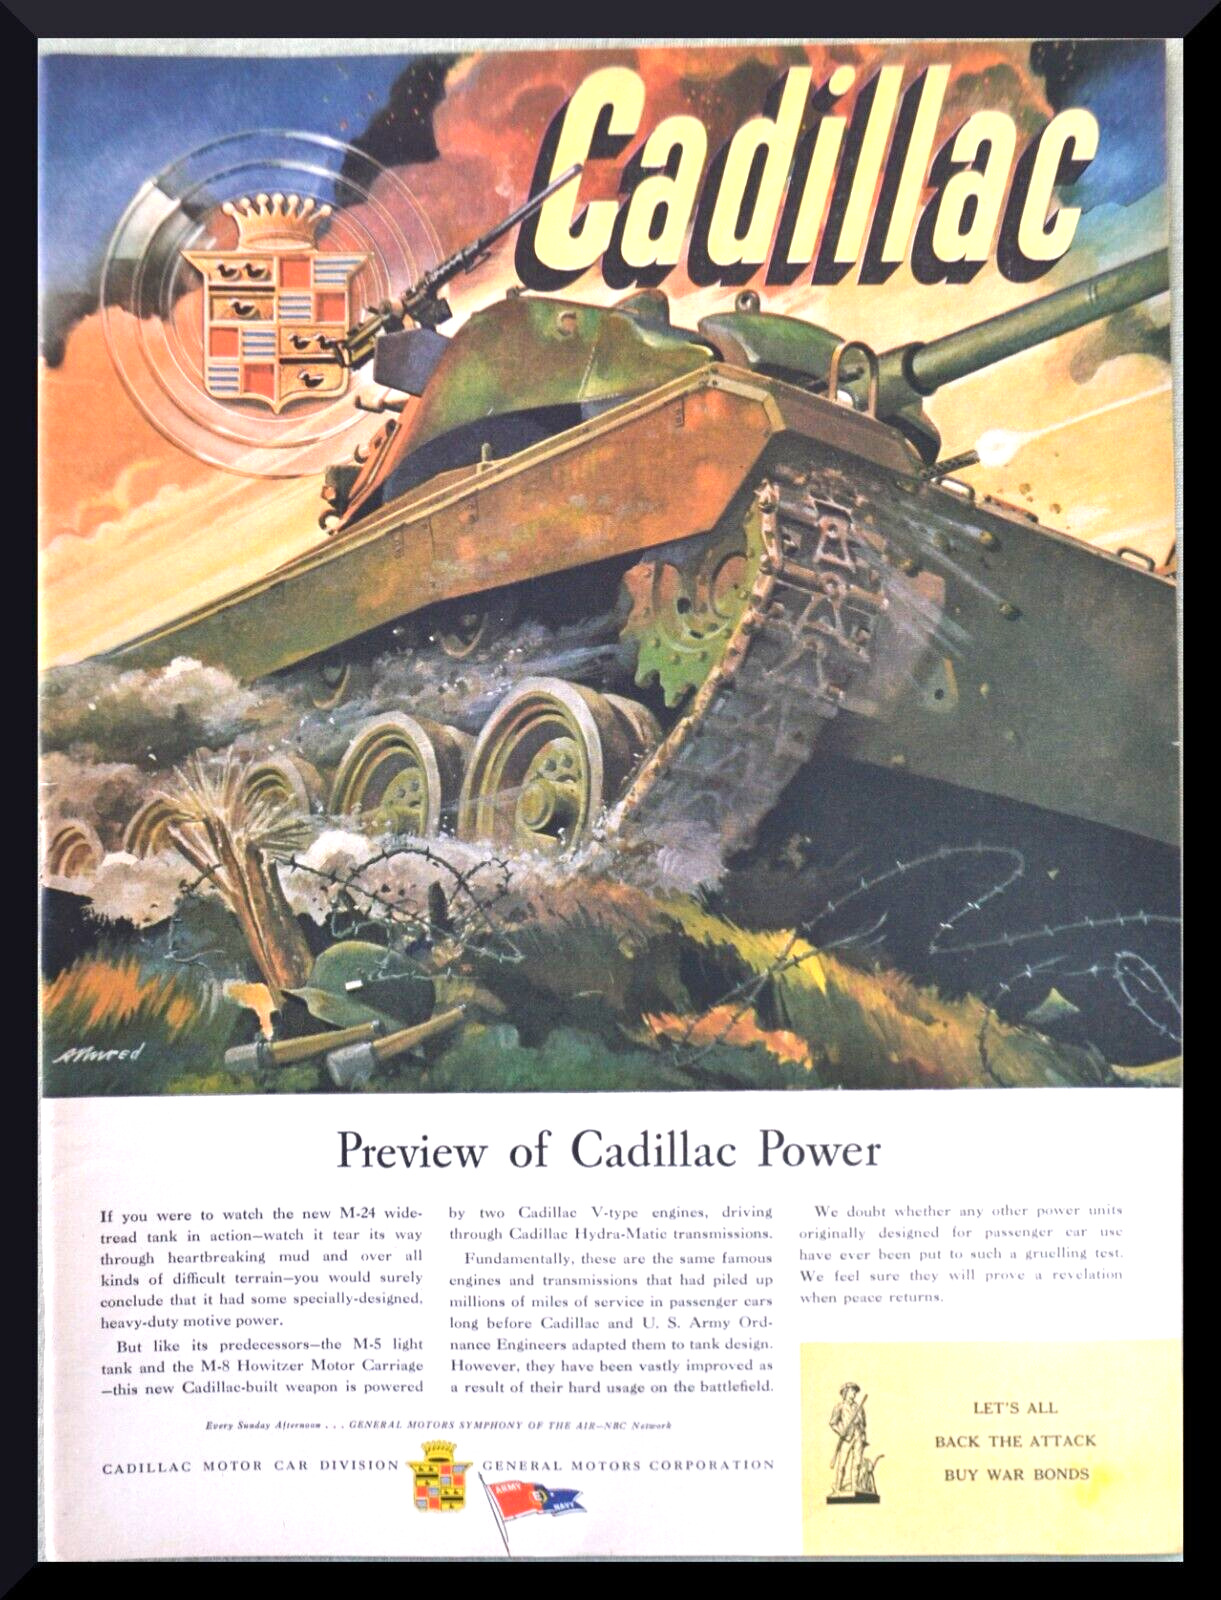 1945 Cadillac US Army M5 Light tank WWII battle art vintage print ad